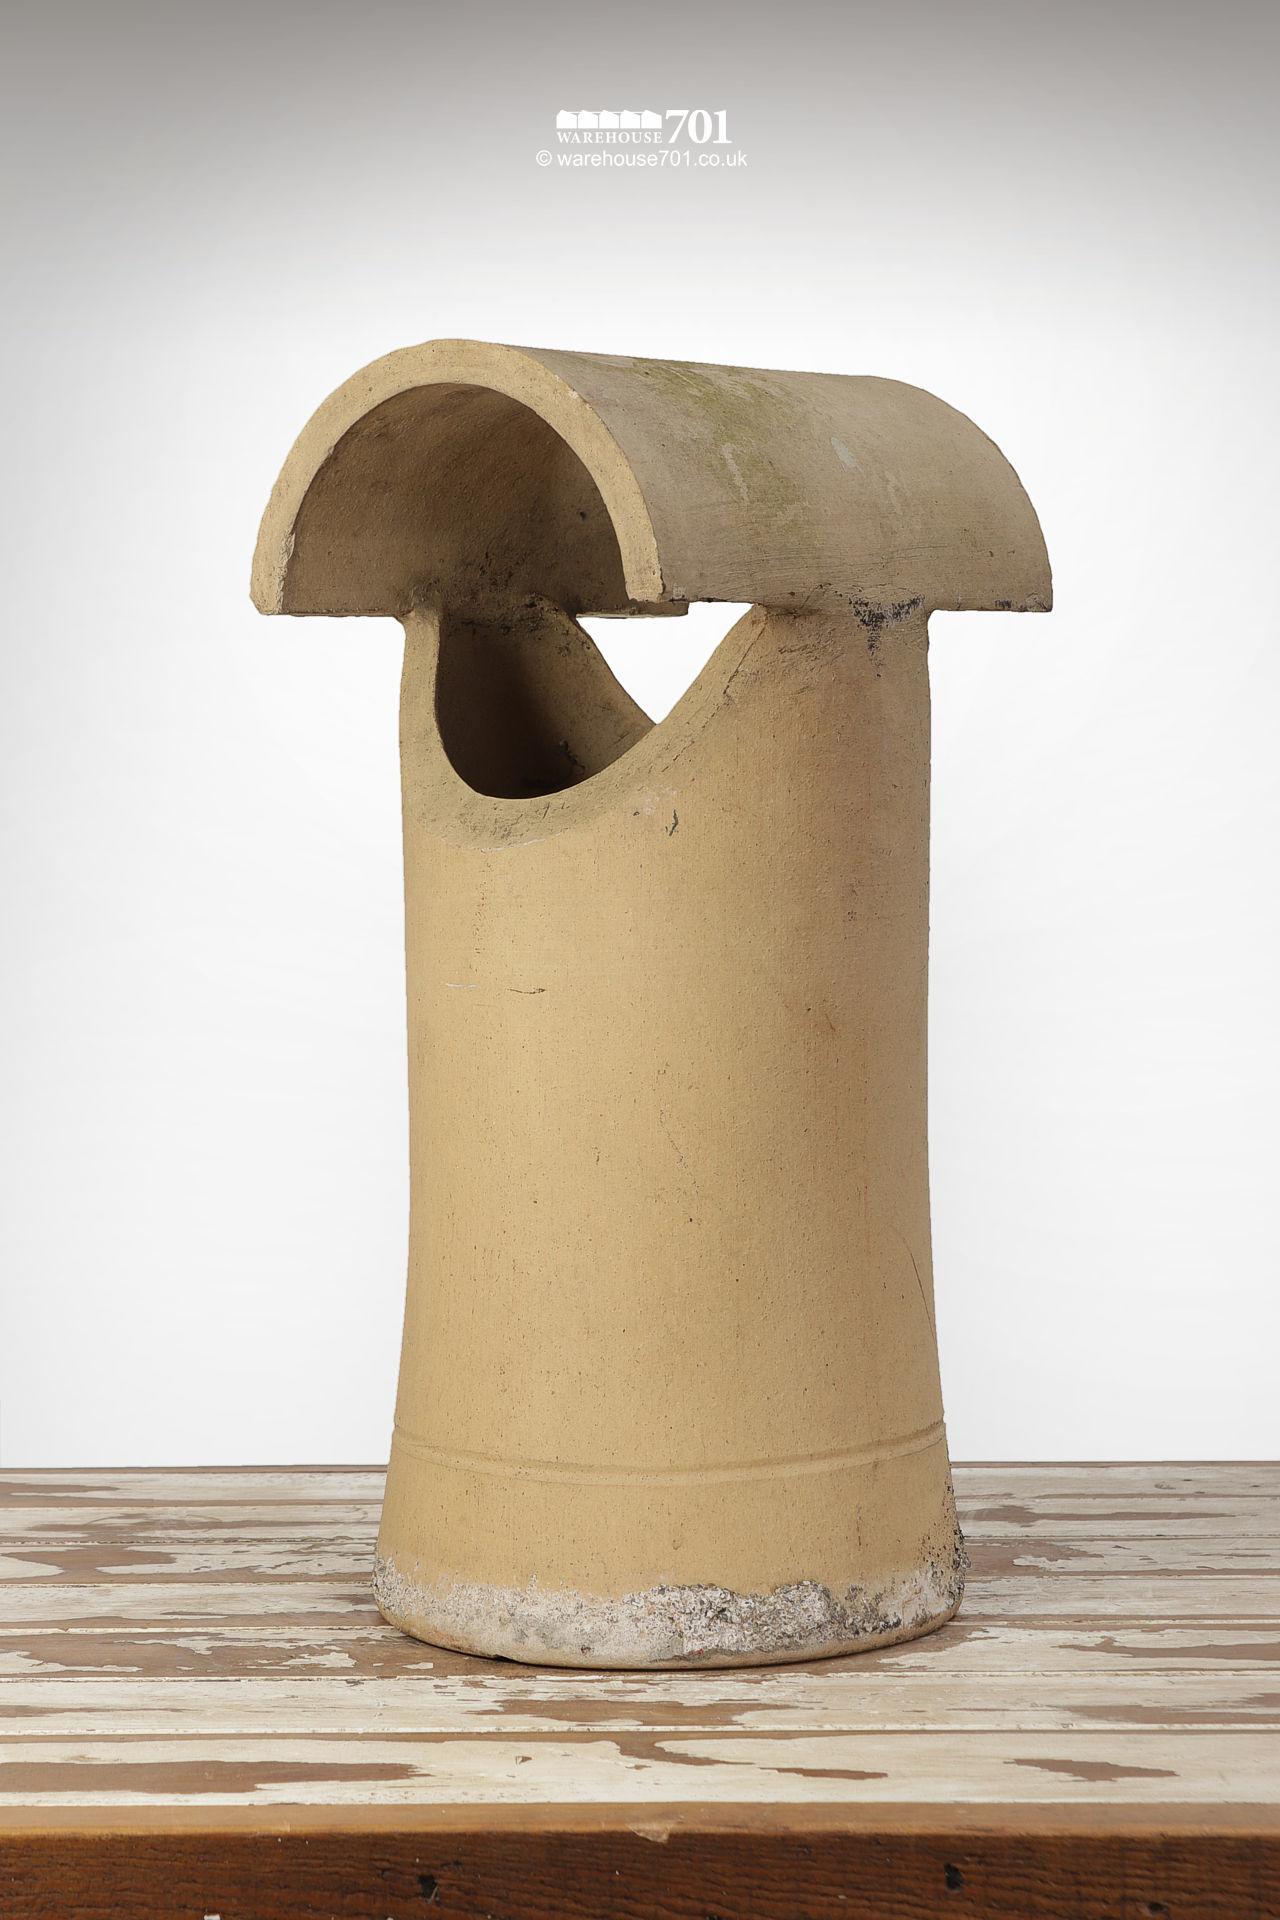 Used bird-beak with cowl buff clay chimney pot #1